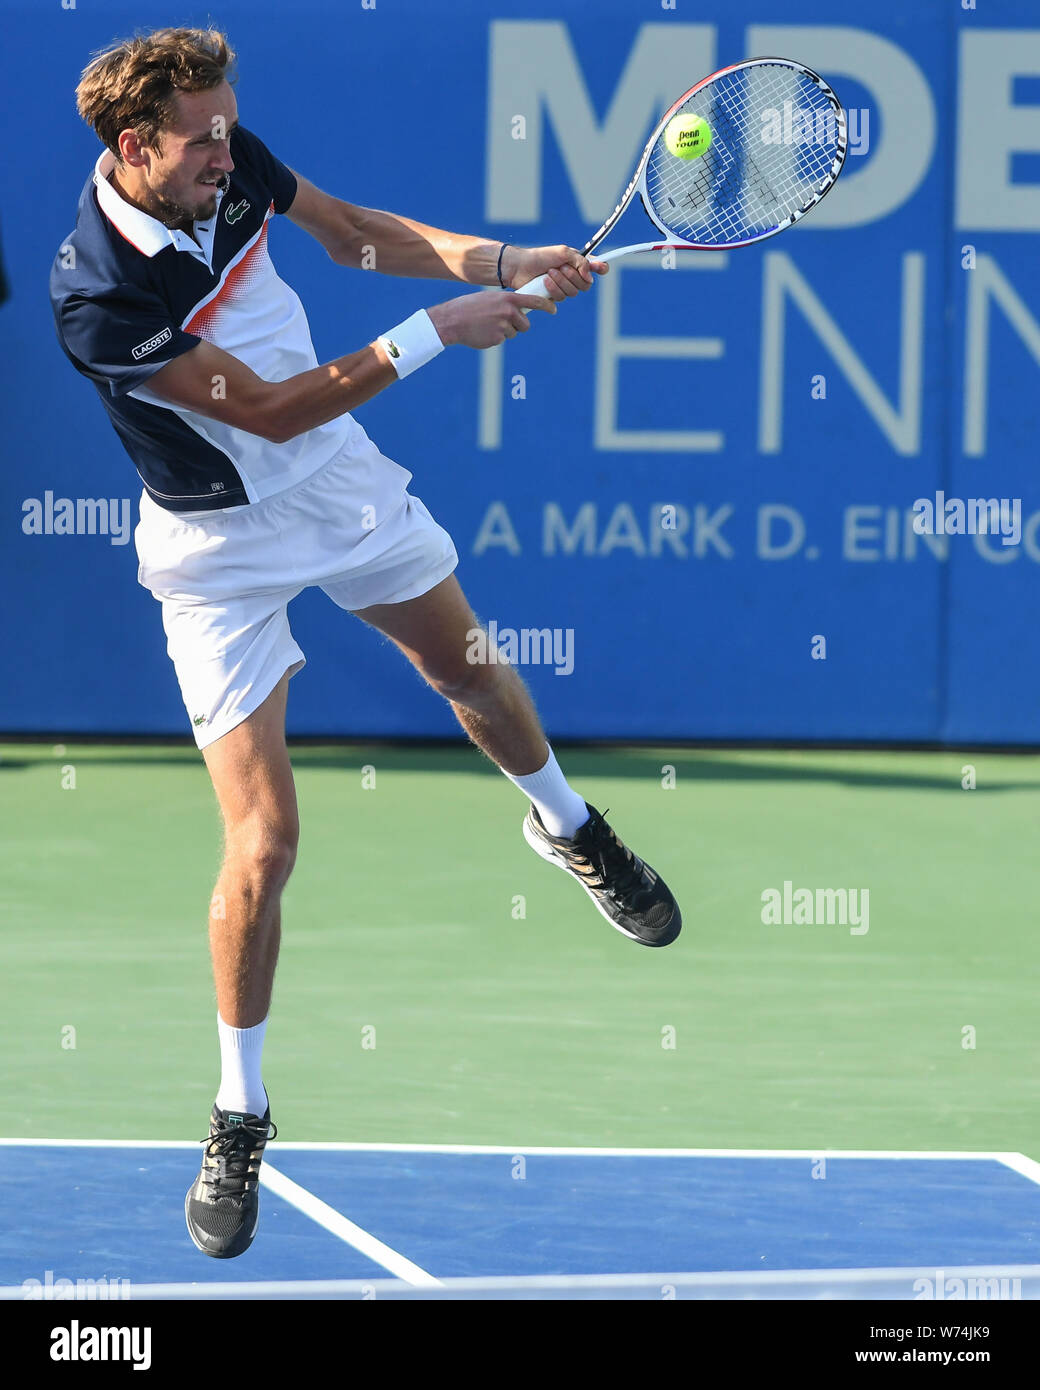 Washington, D.C, USA. 4th Aug, 2019. DANIIL MEDVEDEV hits a backhand at the  Rock Creek Tennis Center. Credit: Kyle Gustafson/ZUMA Wire/Alamy Live News  Stock Photo - Alamy